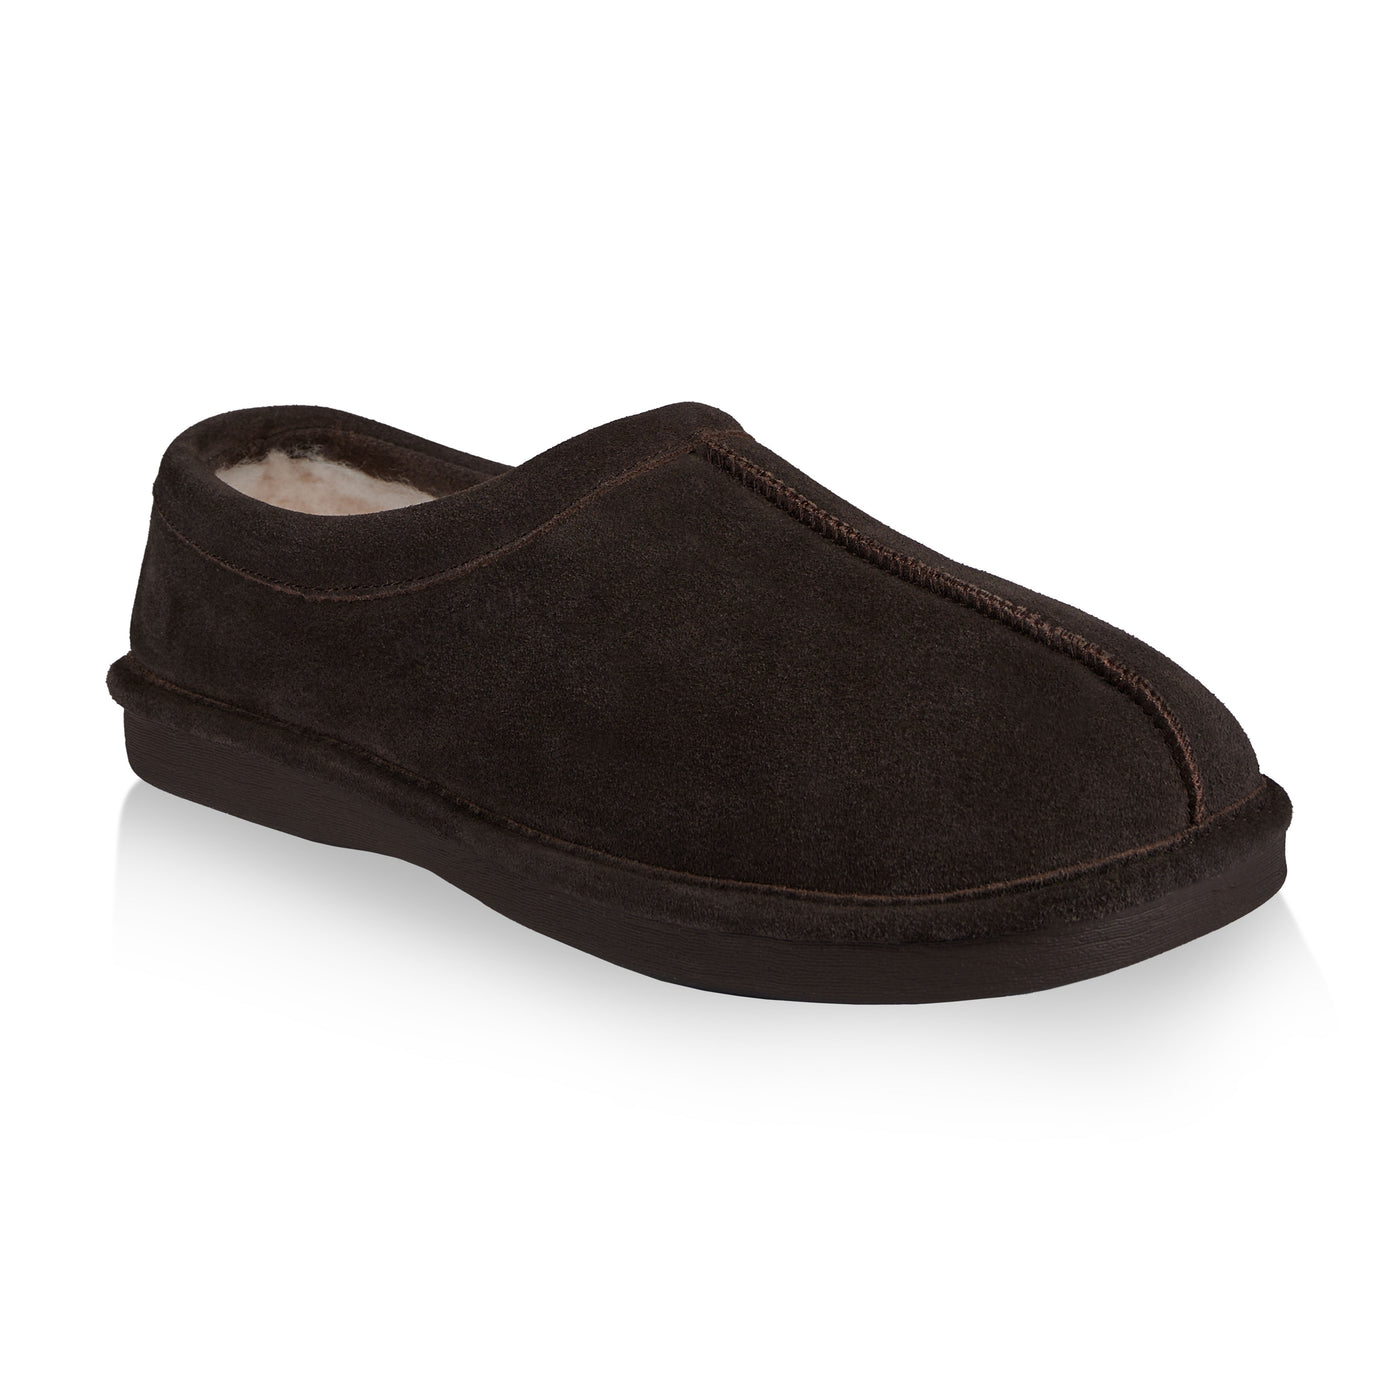 Thomas men’s slipper (Dark brown)